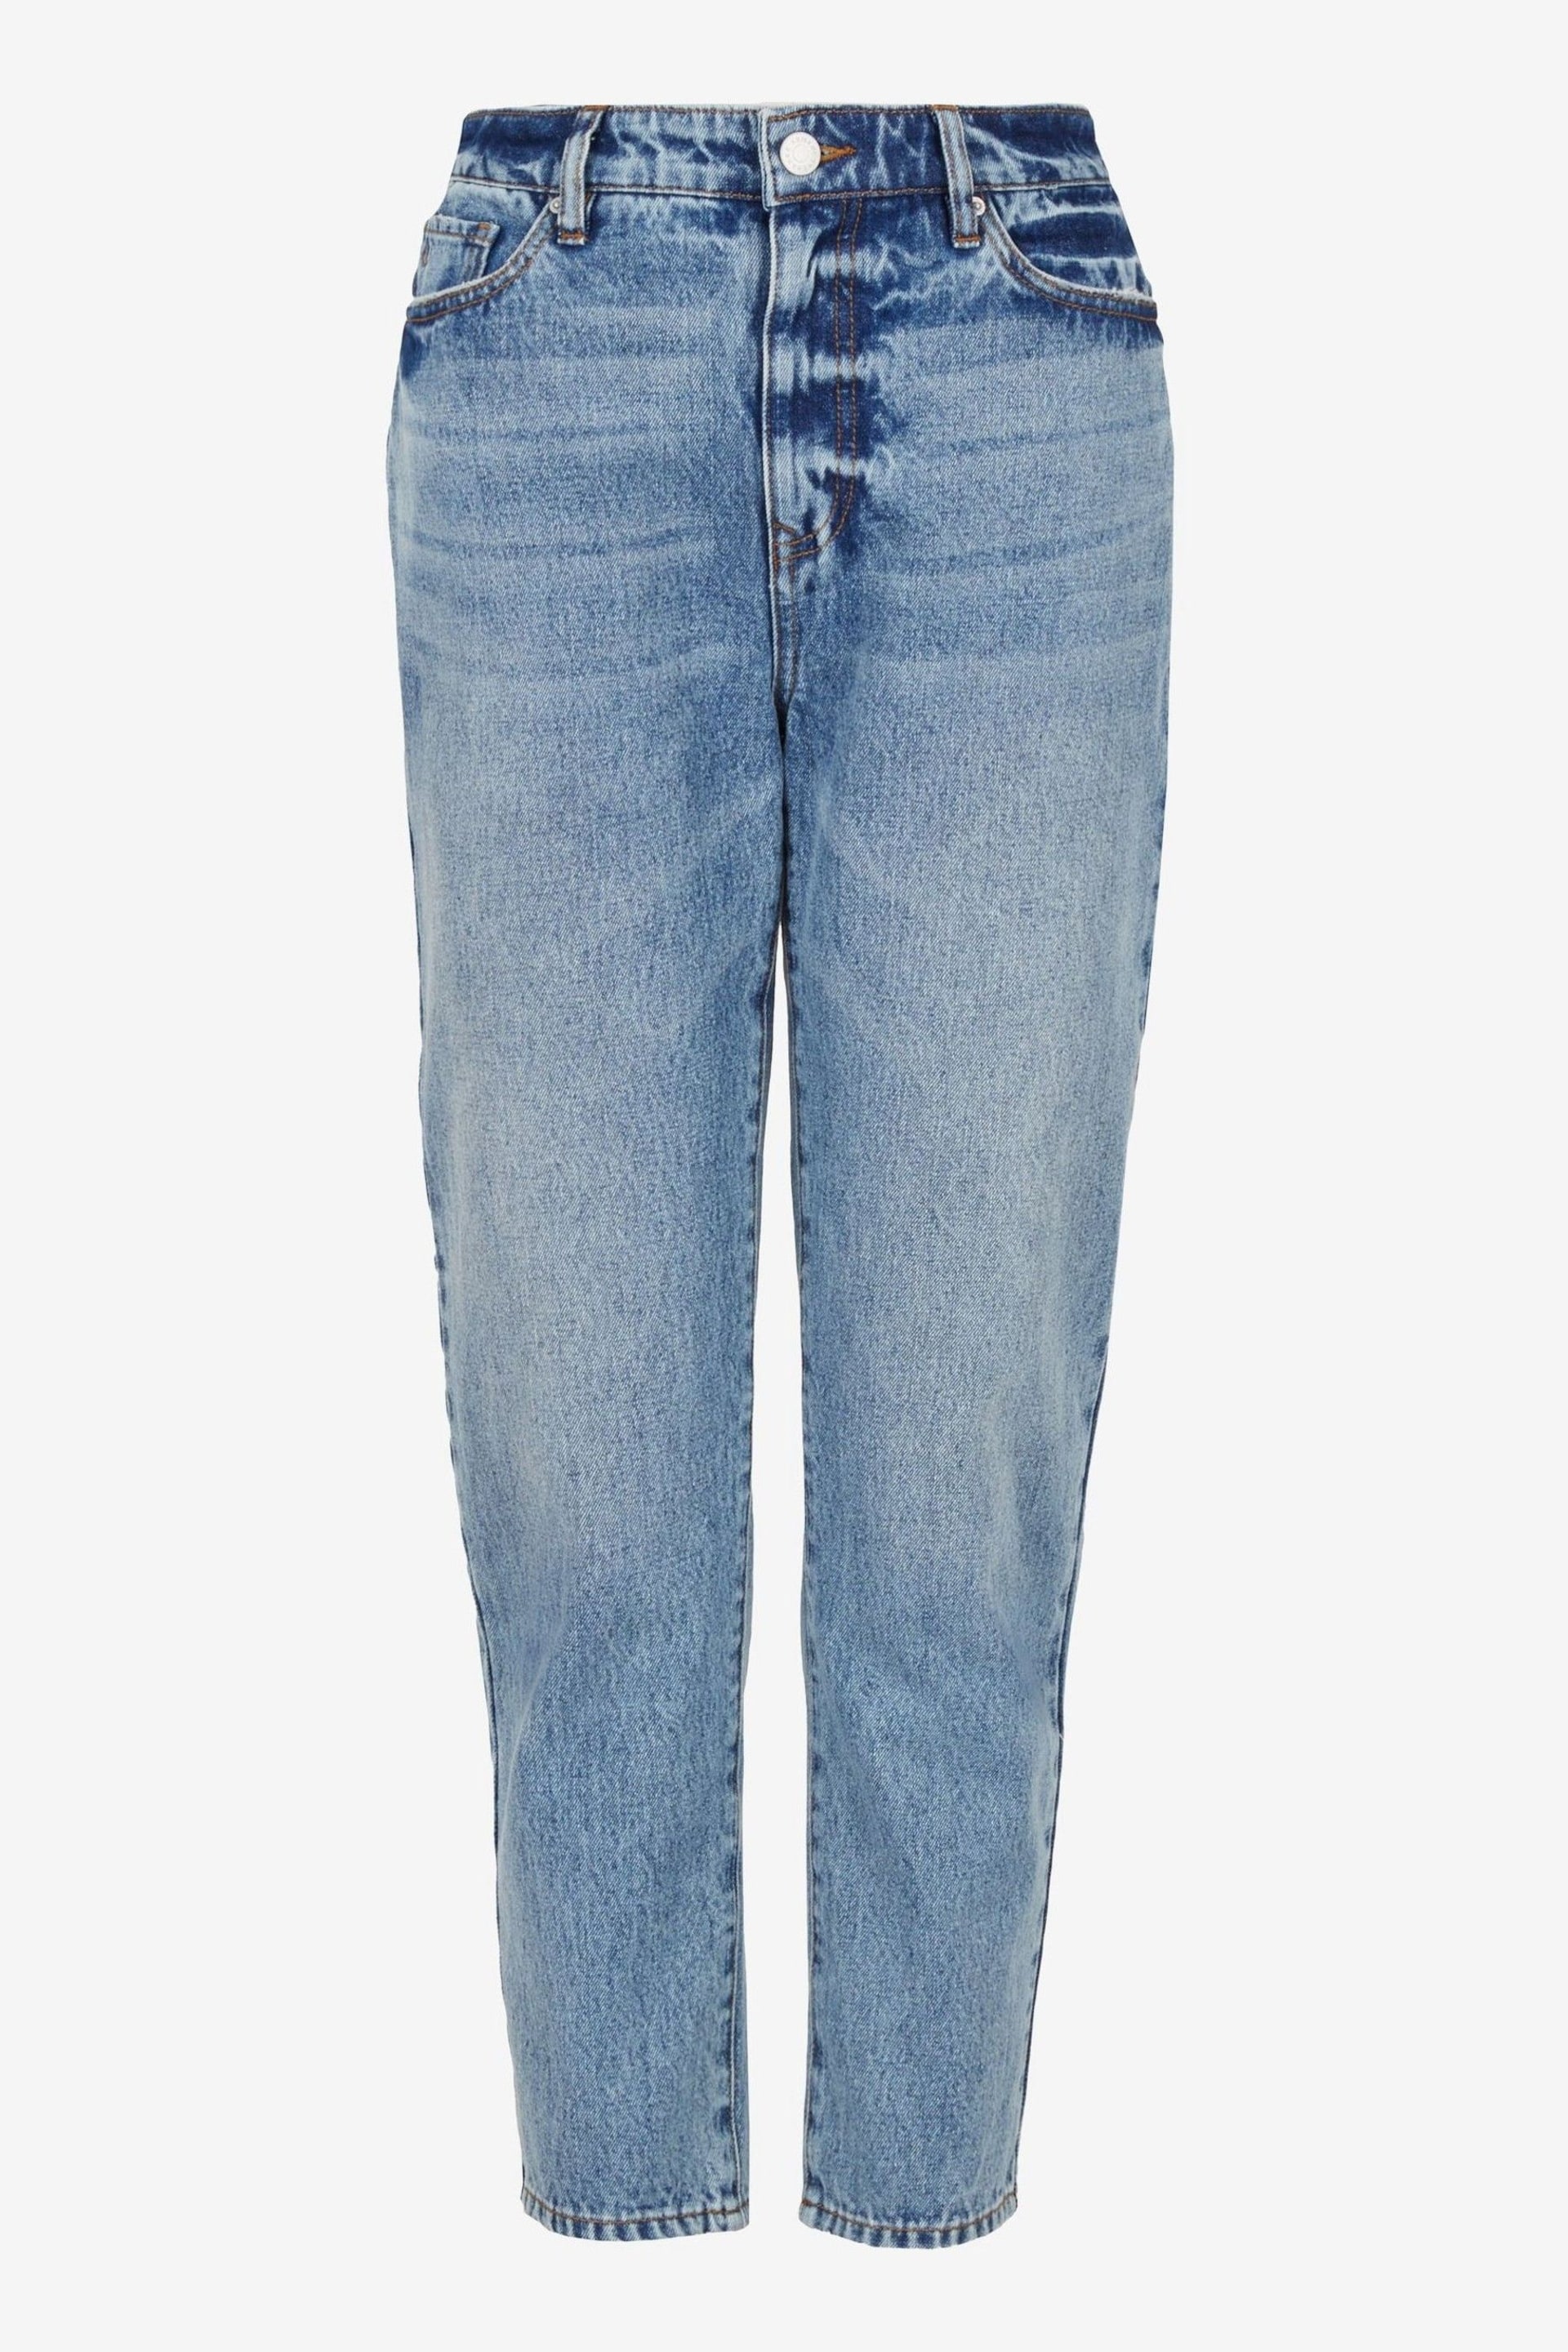 Armani Exchange Denim Lightwash Boyfriend Fit Jeans - Image 3 of 5